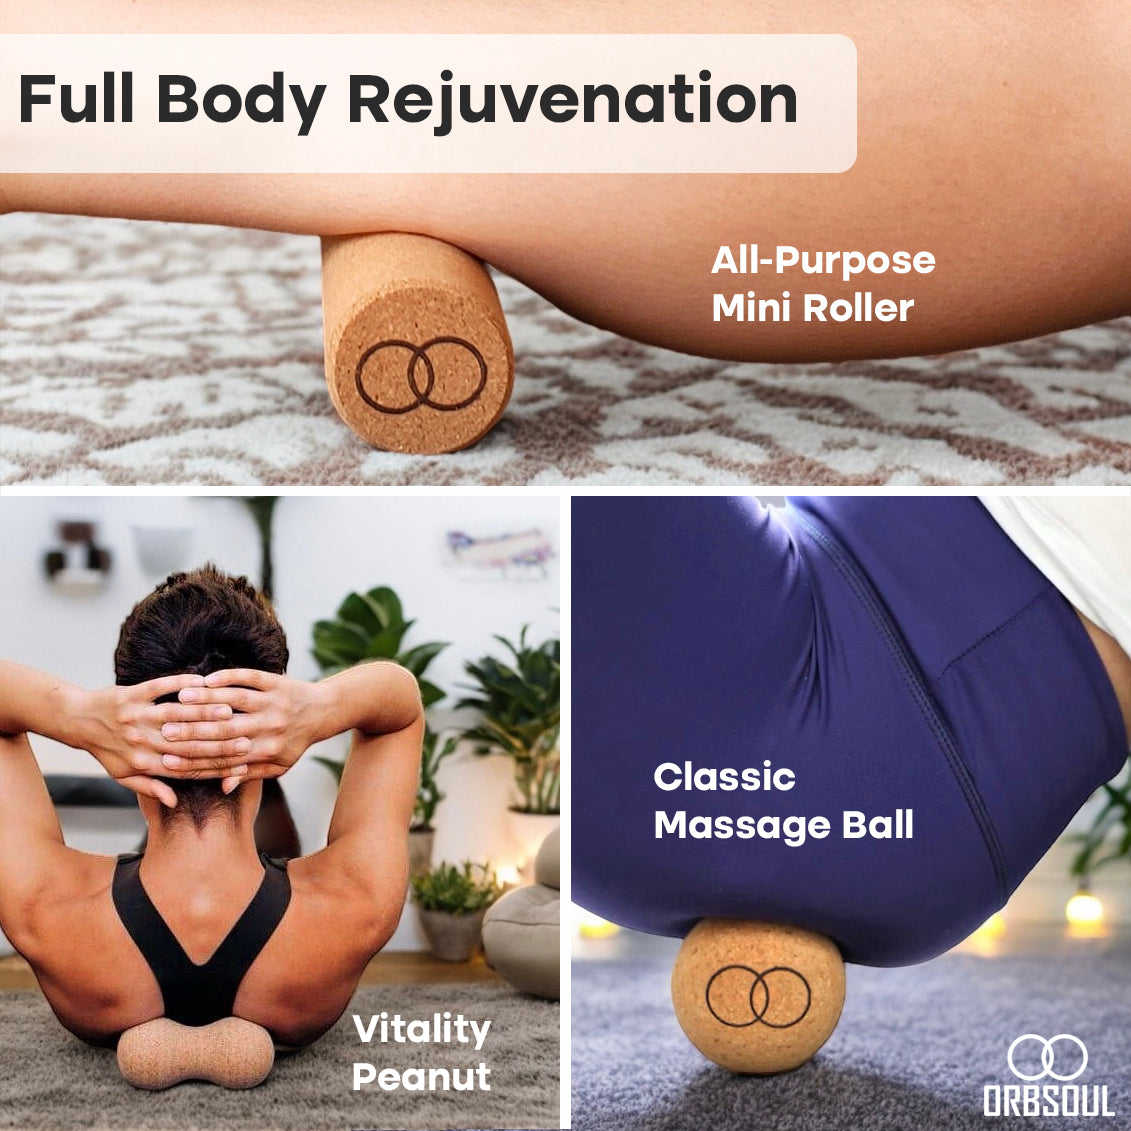 serenity cork massage roller 3 piece set. Full body rejuvenation. Includes All-purpose mini roller, vitality peanut massager, and classic massage ball 